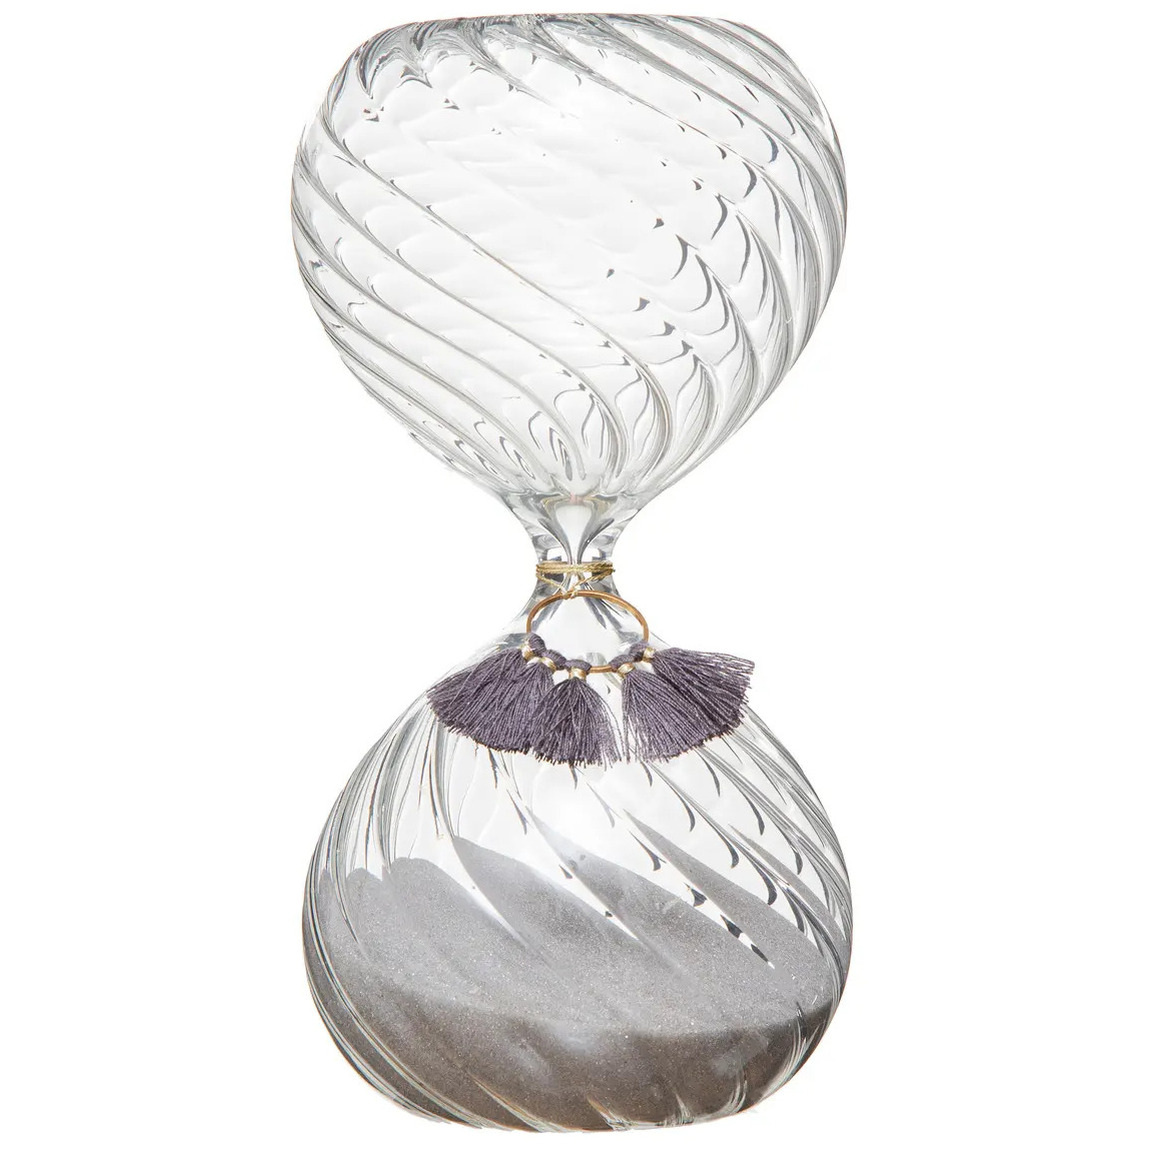 Atmosphera Zandloper cilinder decoratie of tijdsmeting 20 minuten grijs zand H18 cm glas